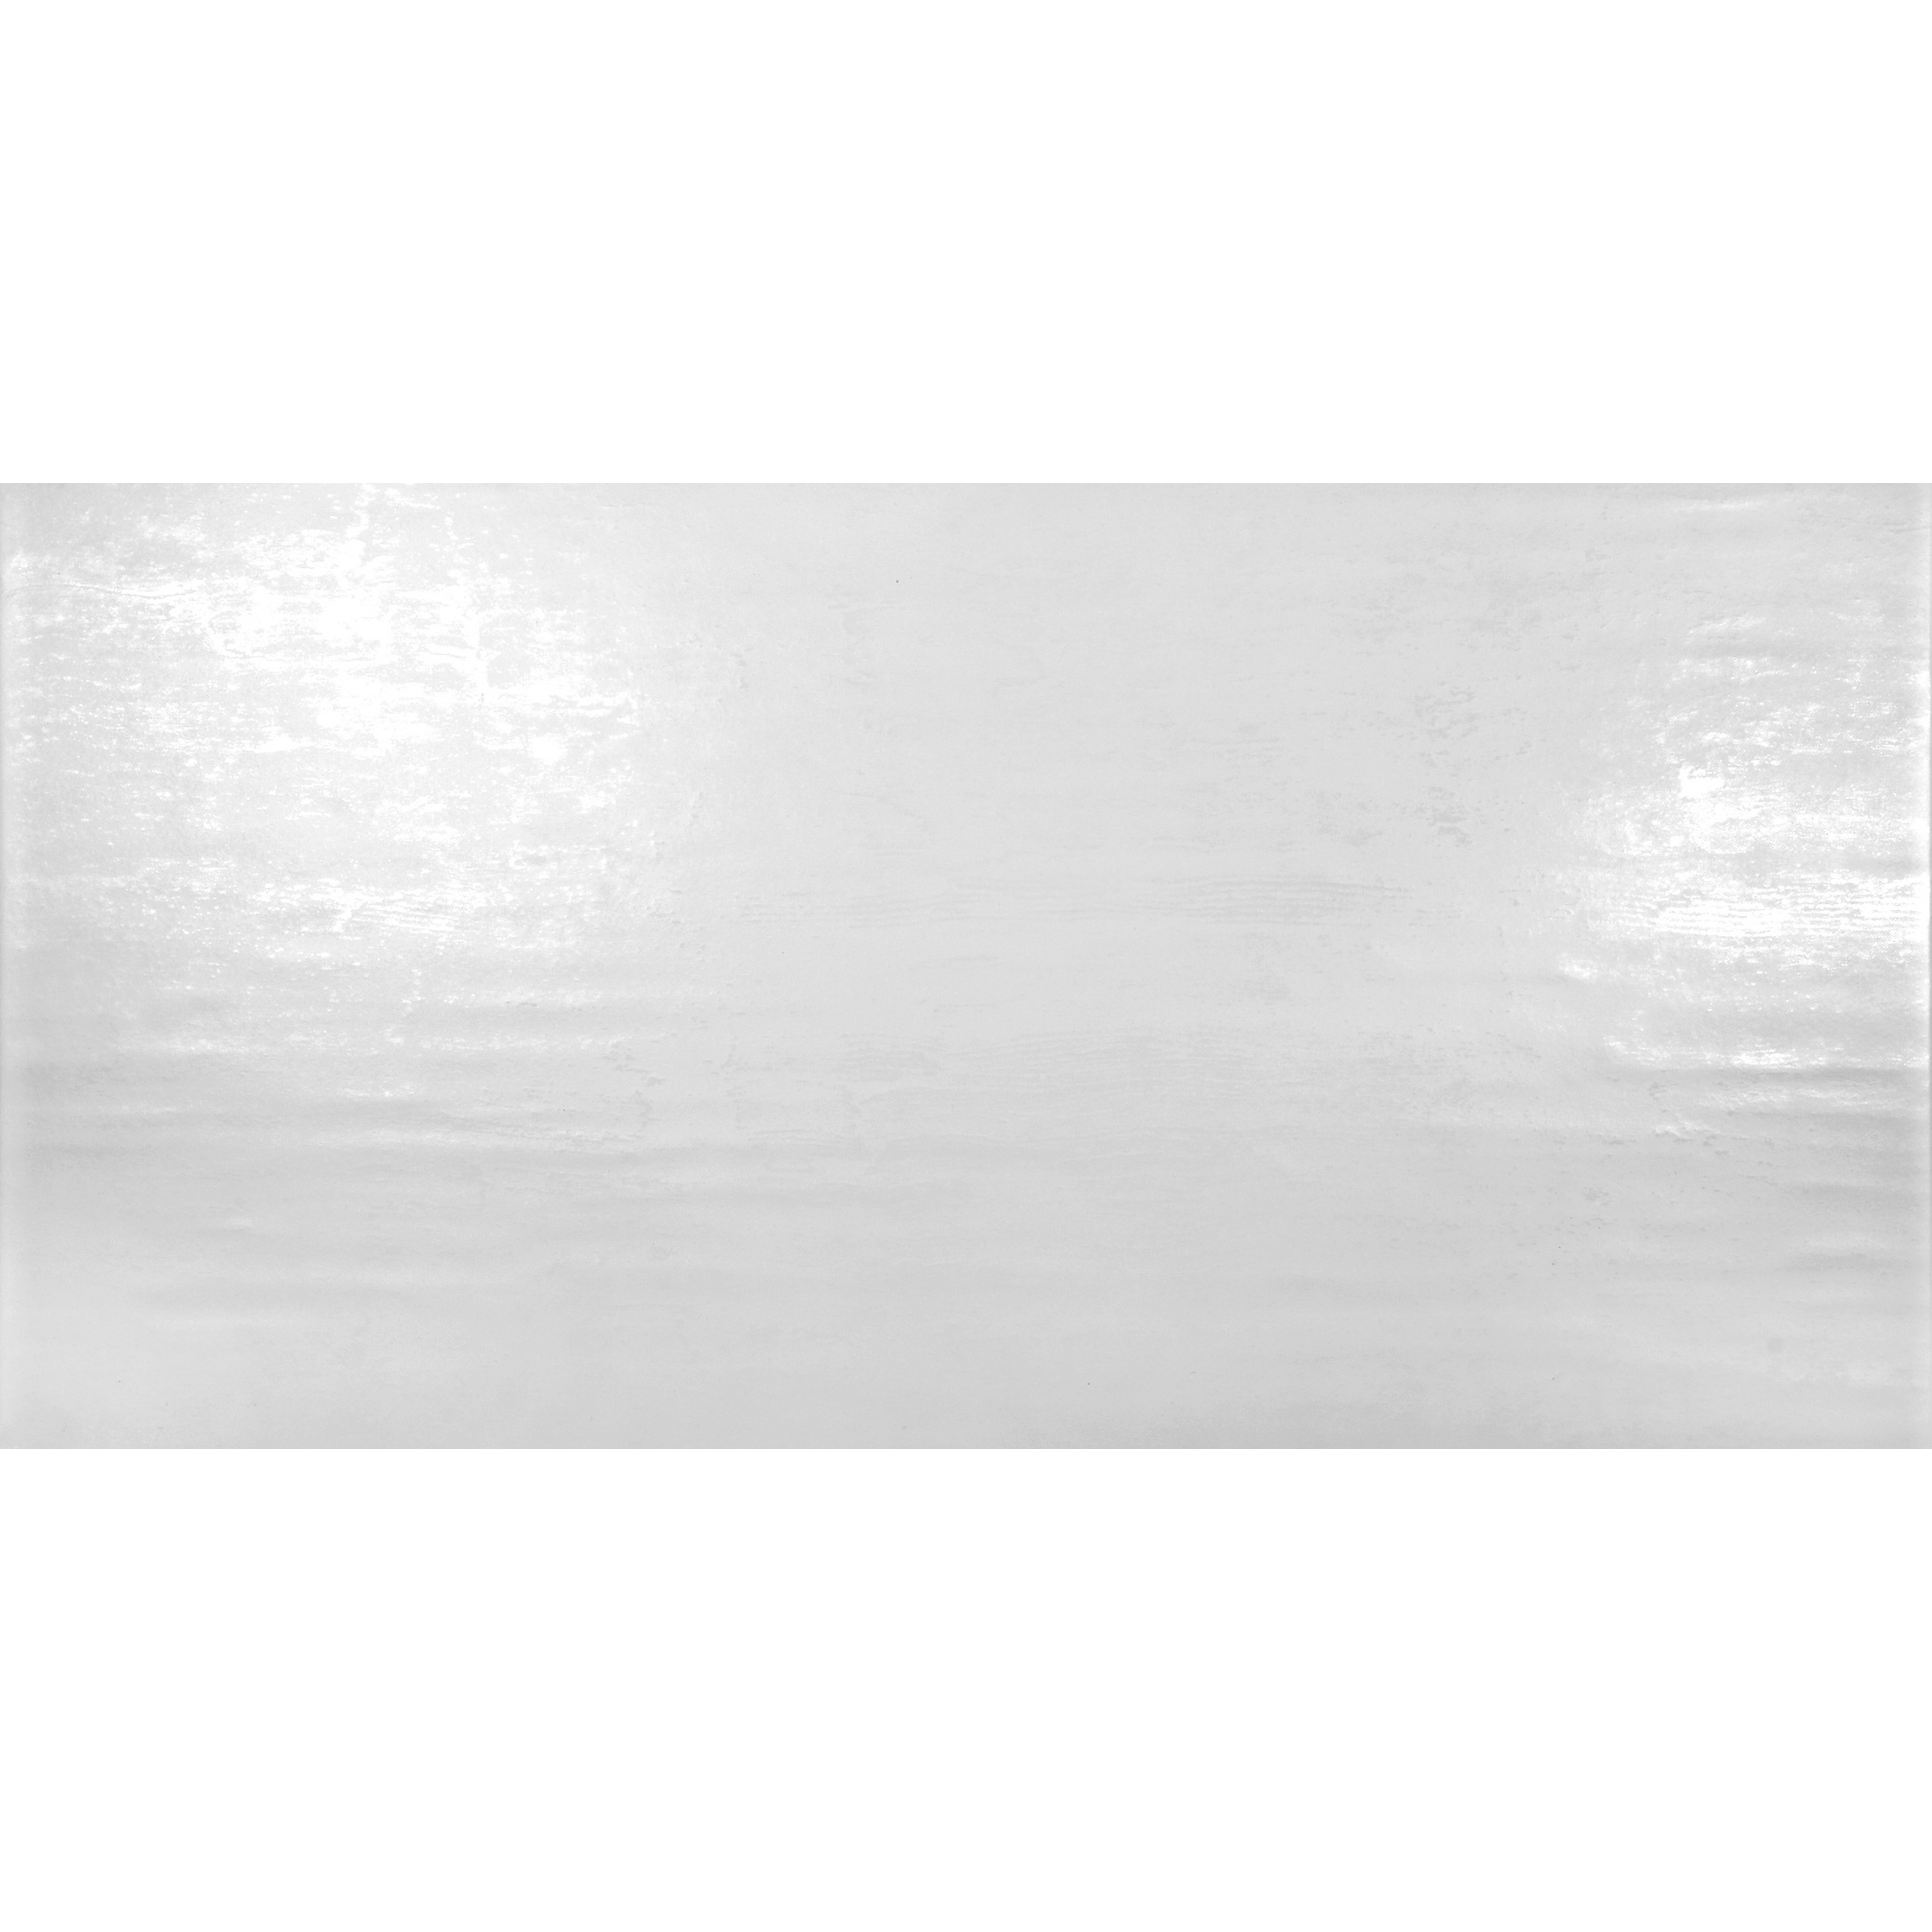 Wandfliese 'Globe' Steingut weiß matt, strukturiert 30 x 60 cm + product picture